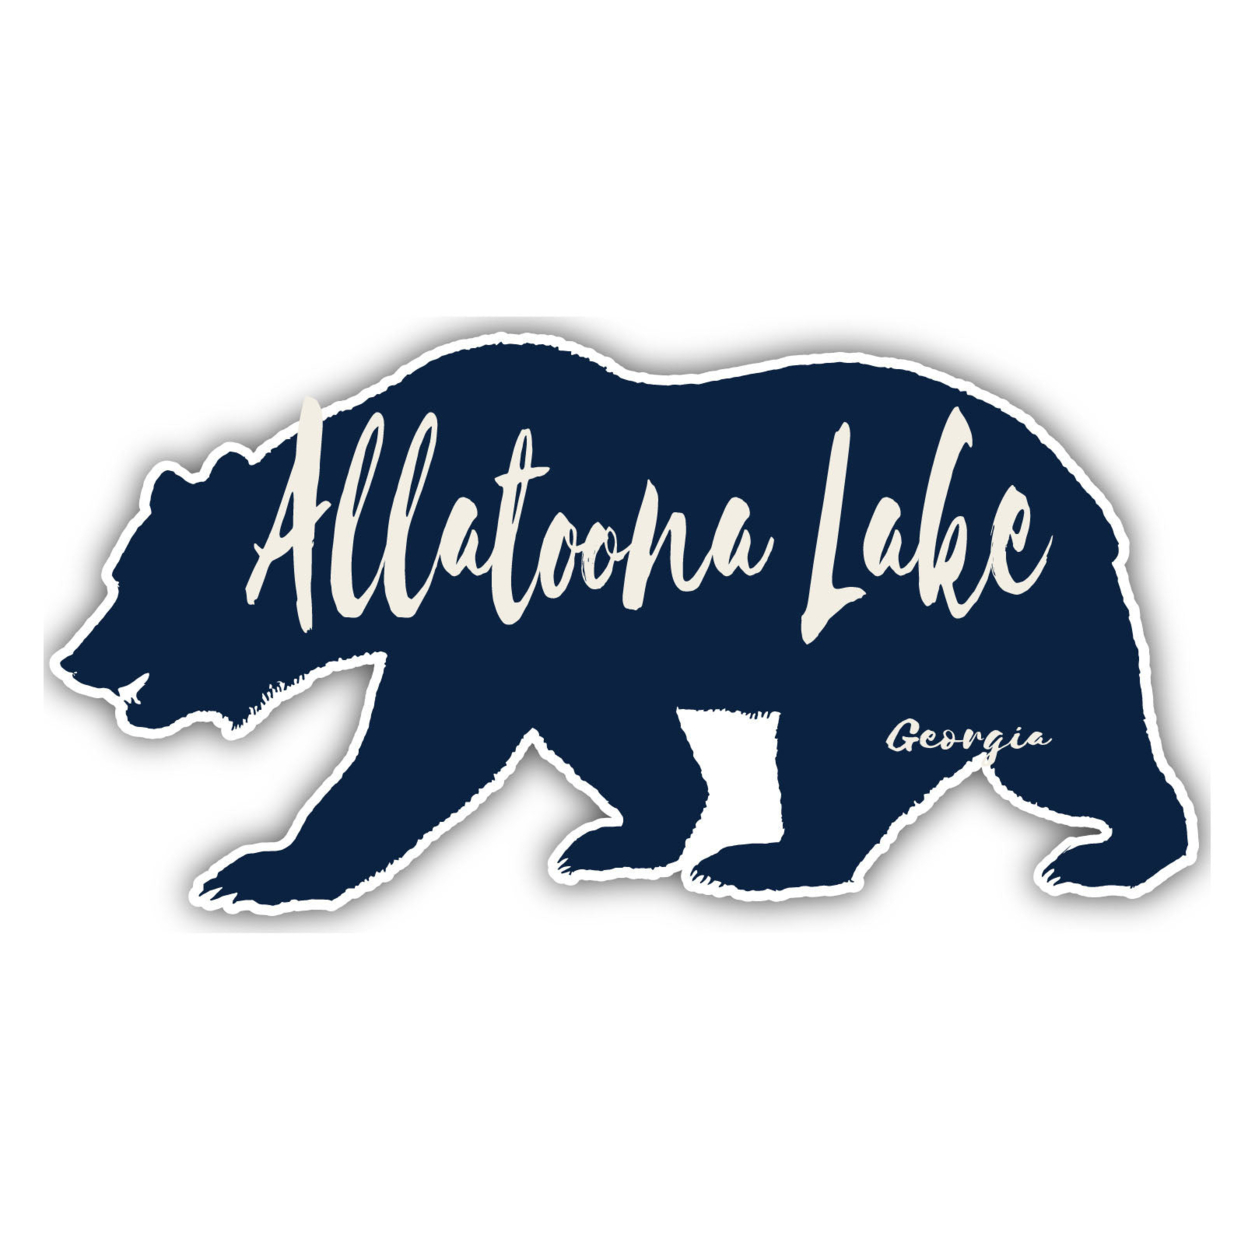 Allatoona Lake Georgia Souvenir Decorative Stickers (Choose Theme And Size) - Single Unit, 12-Inch, Bear